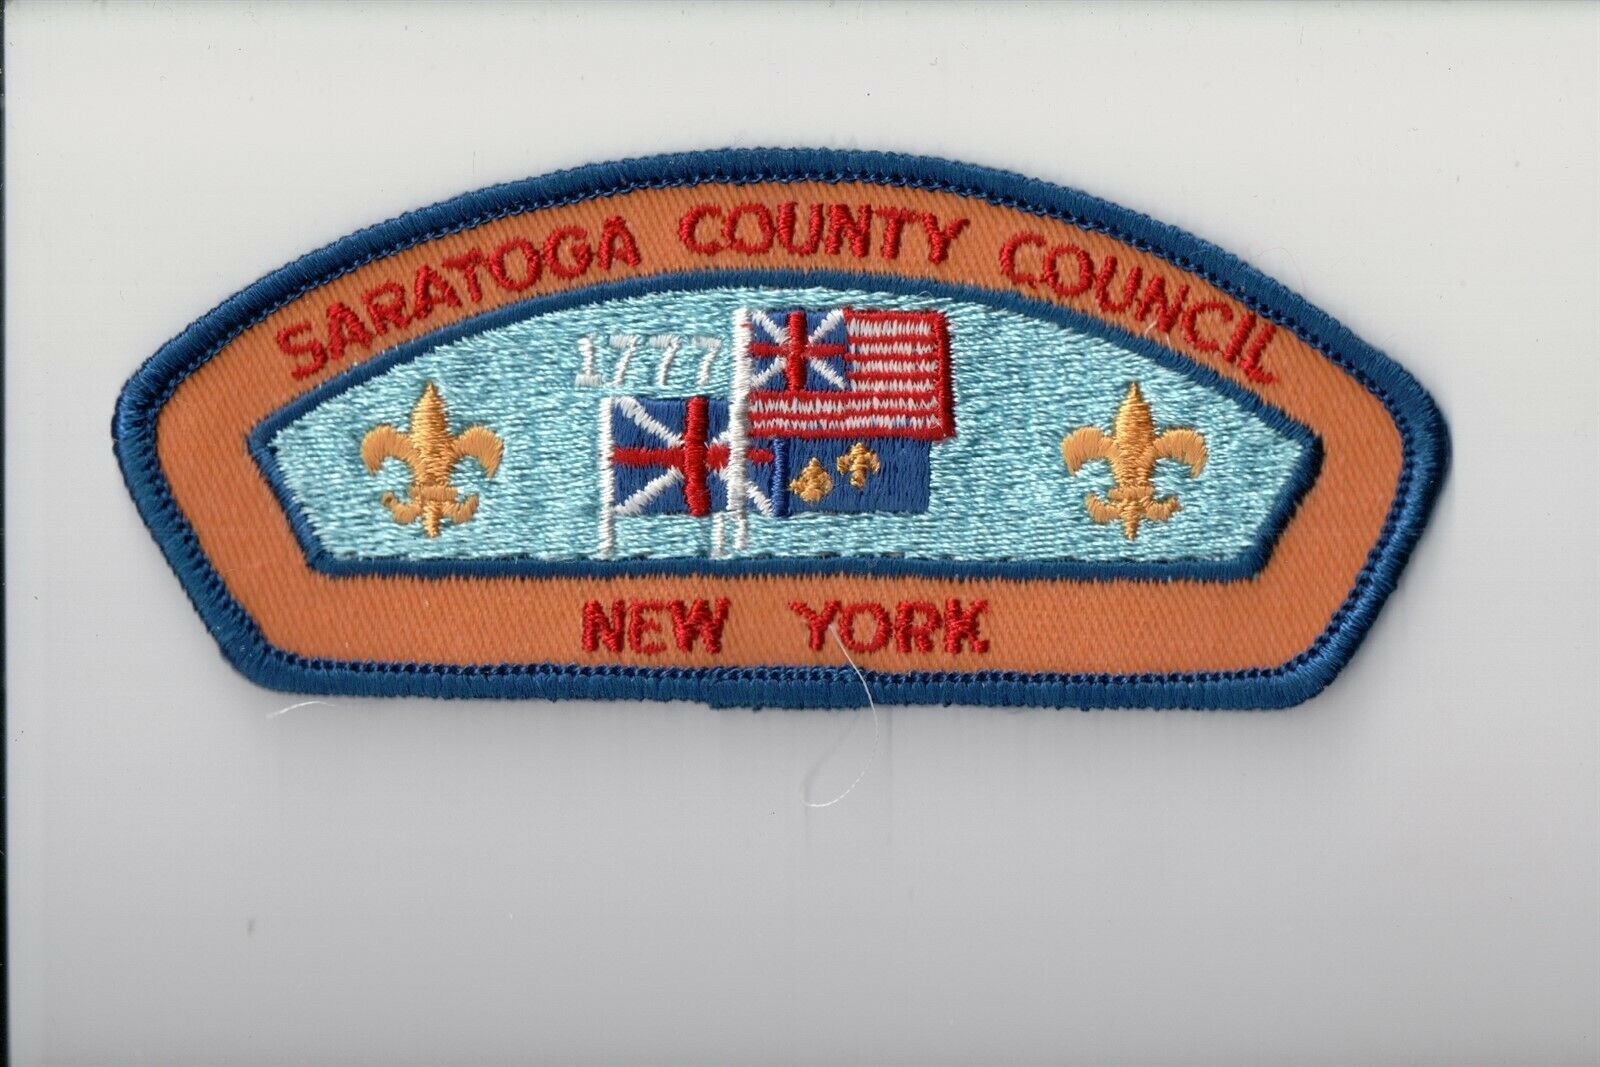 Saratoga County Council Csp (d)